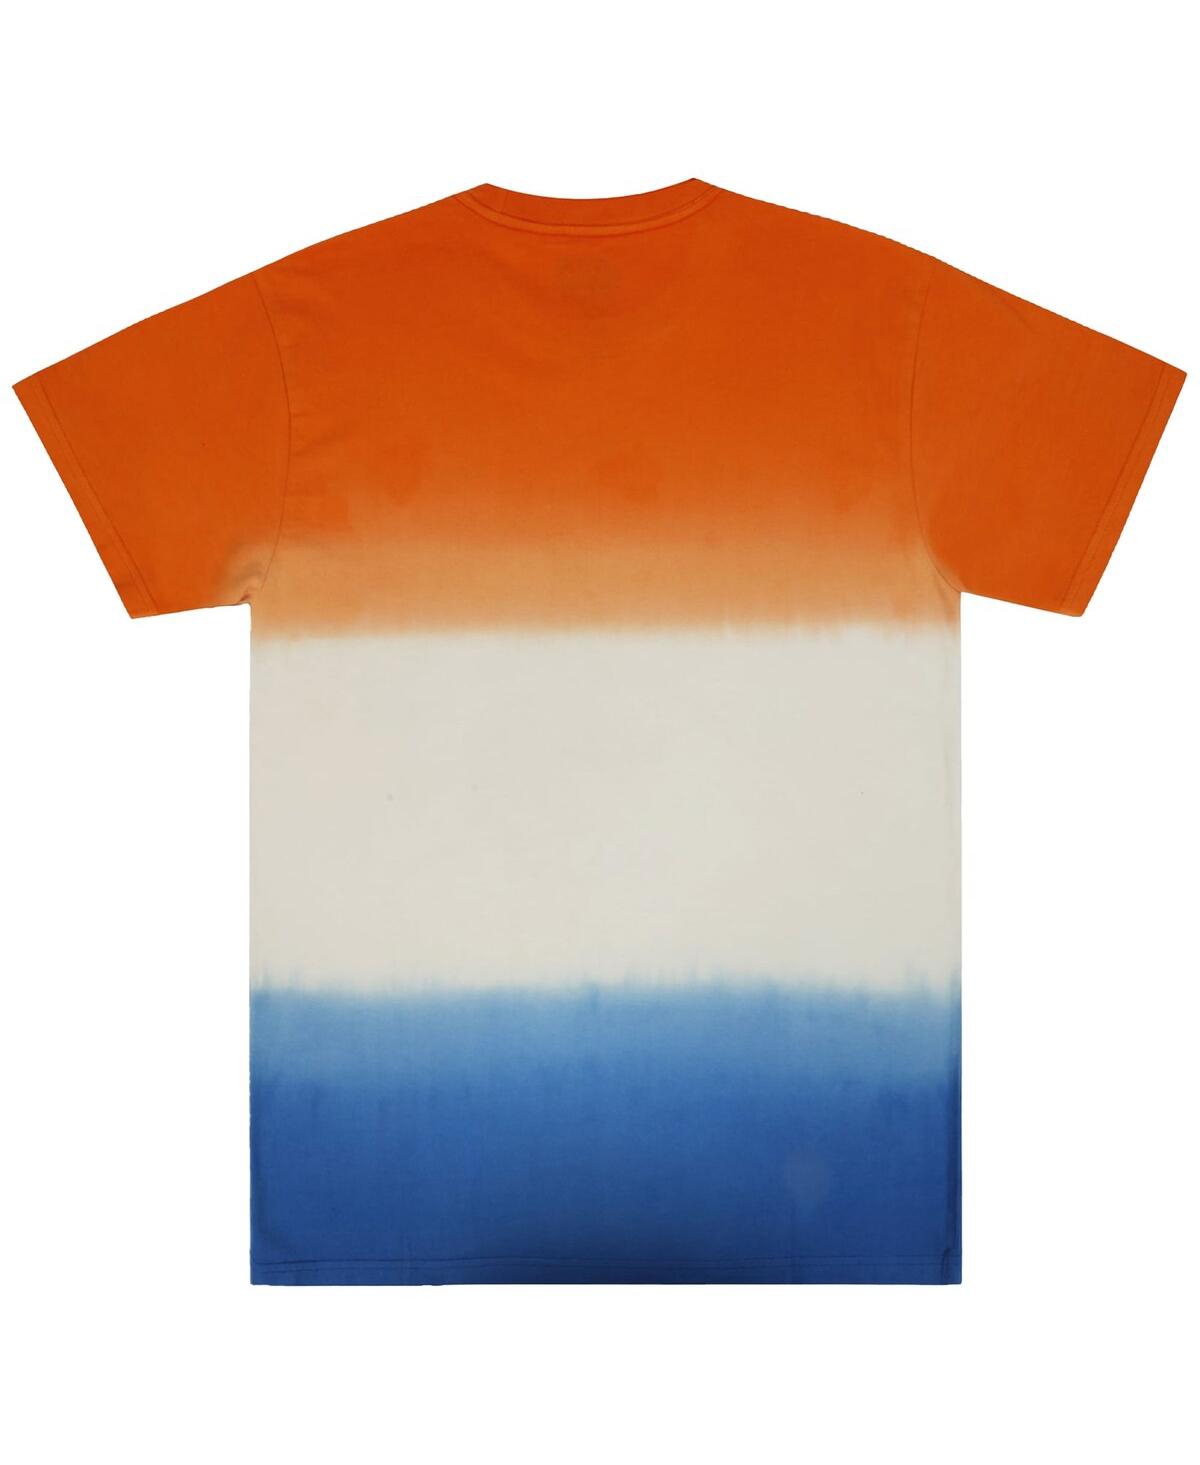 Shop Heroes & Villains Unisex Orange/blue Star Wars Ahsoka 332nd Company Colorblock T-shirt In Orange,blue